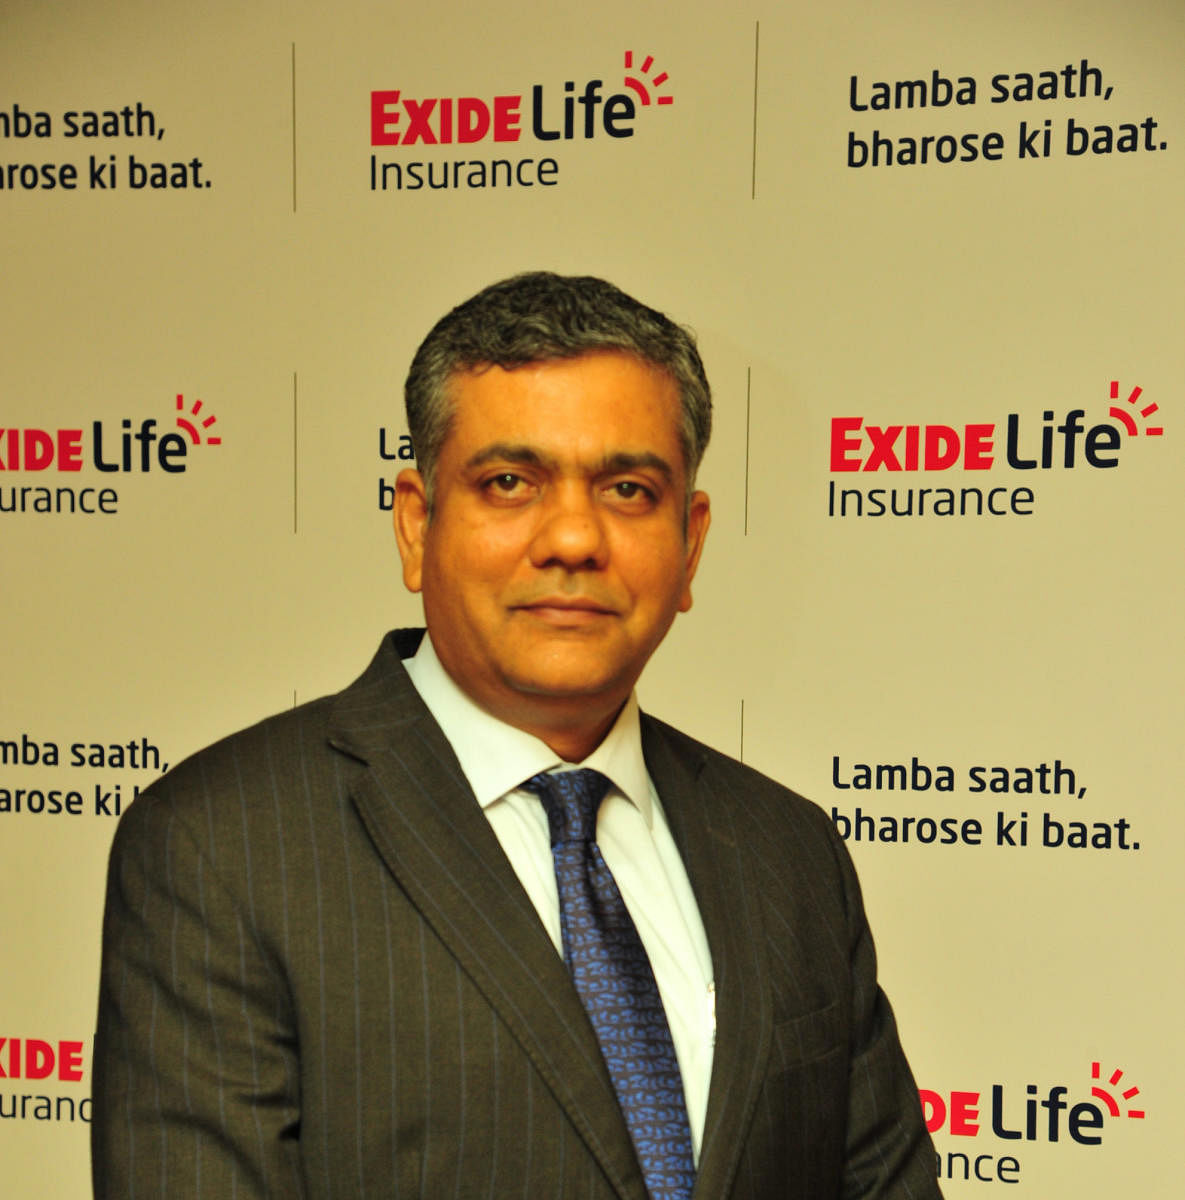 Managing director and CEO of Exide Life Insurance Kshitij Jain